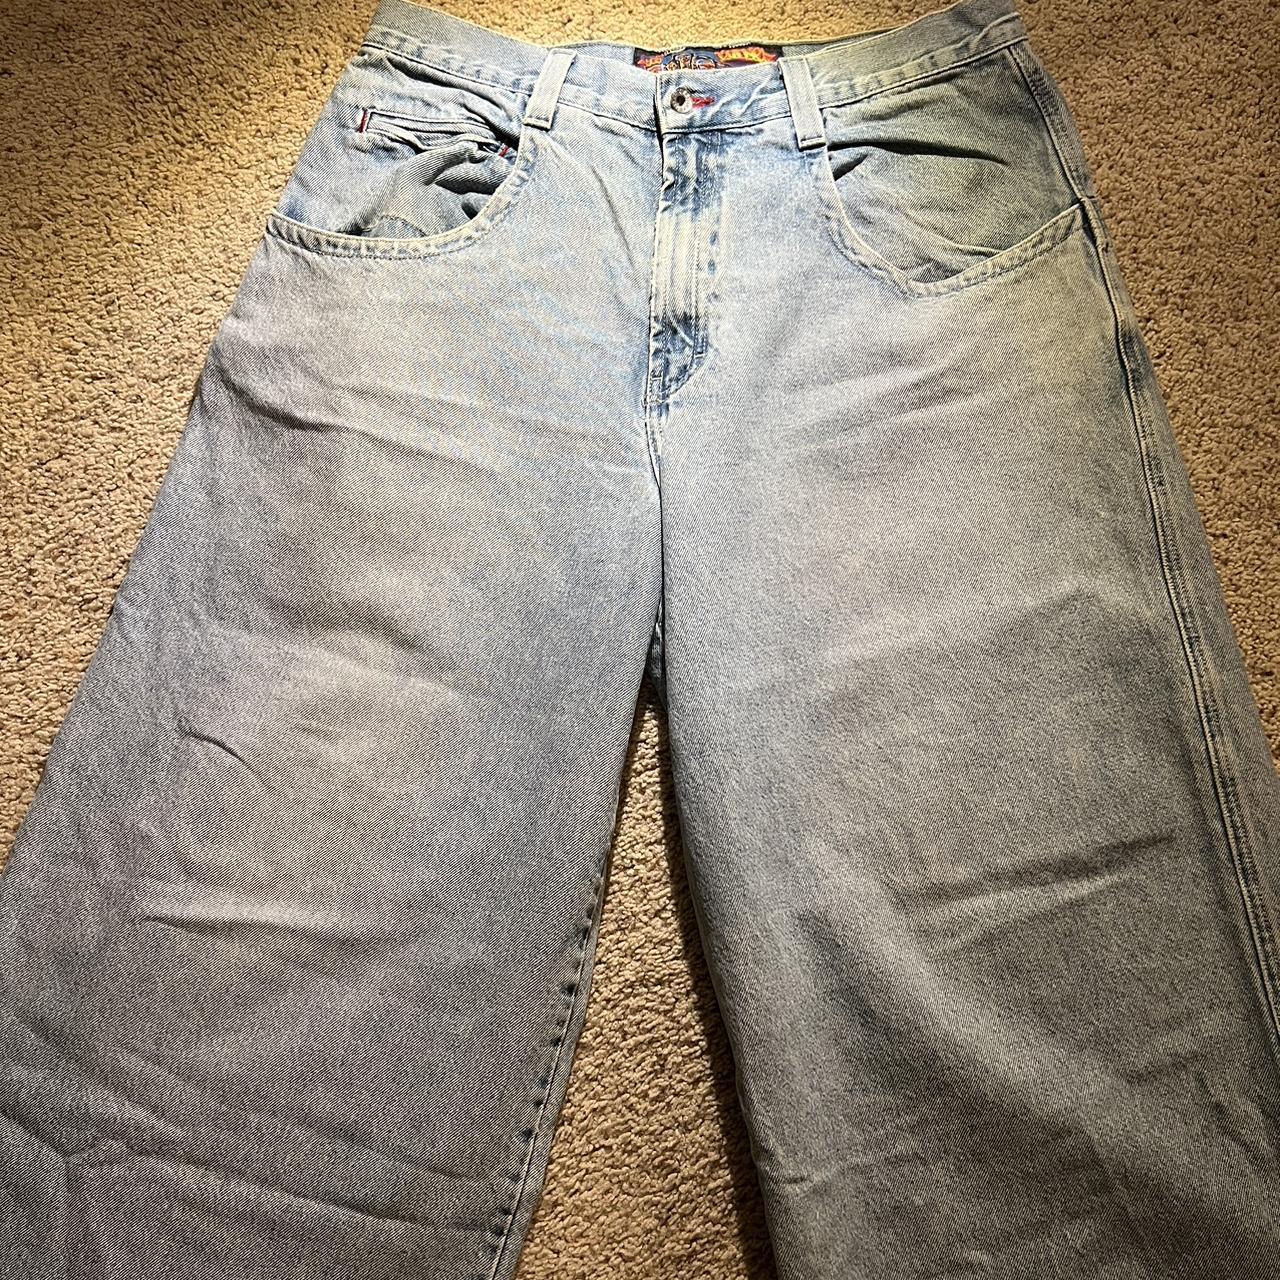 Vintage JNCO Burners jeans/jorts Wide leg 36x20... - Depop